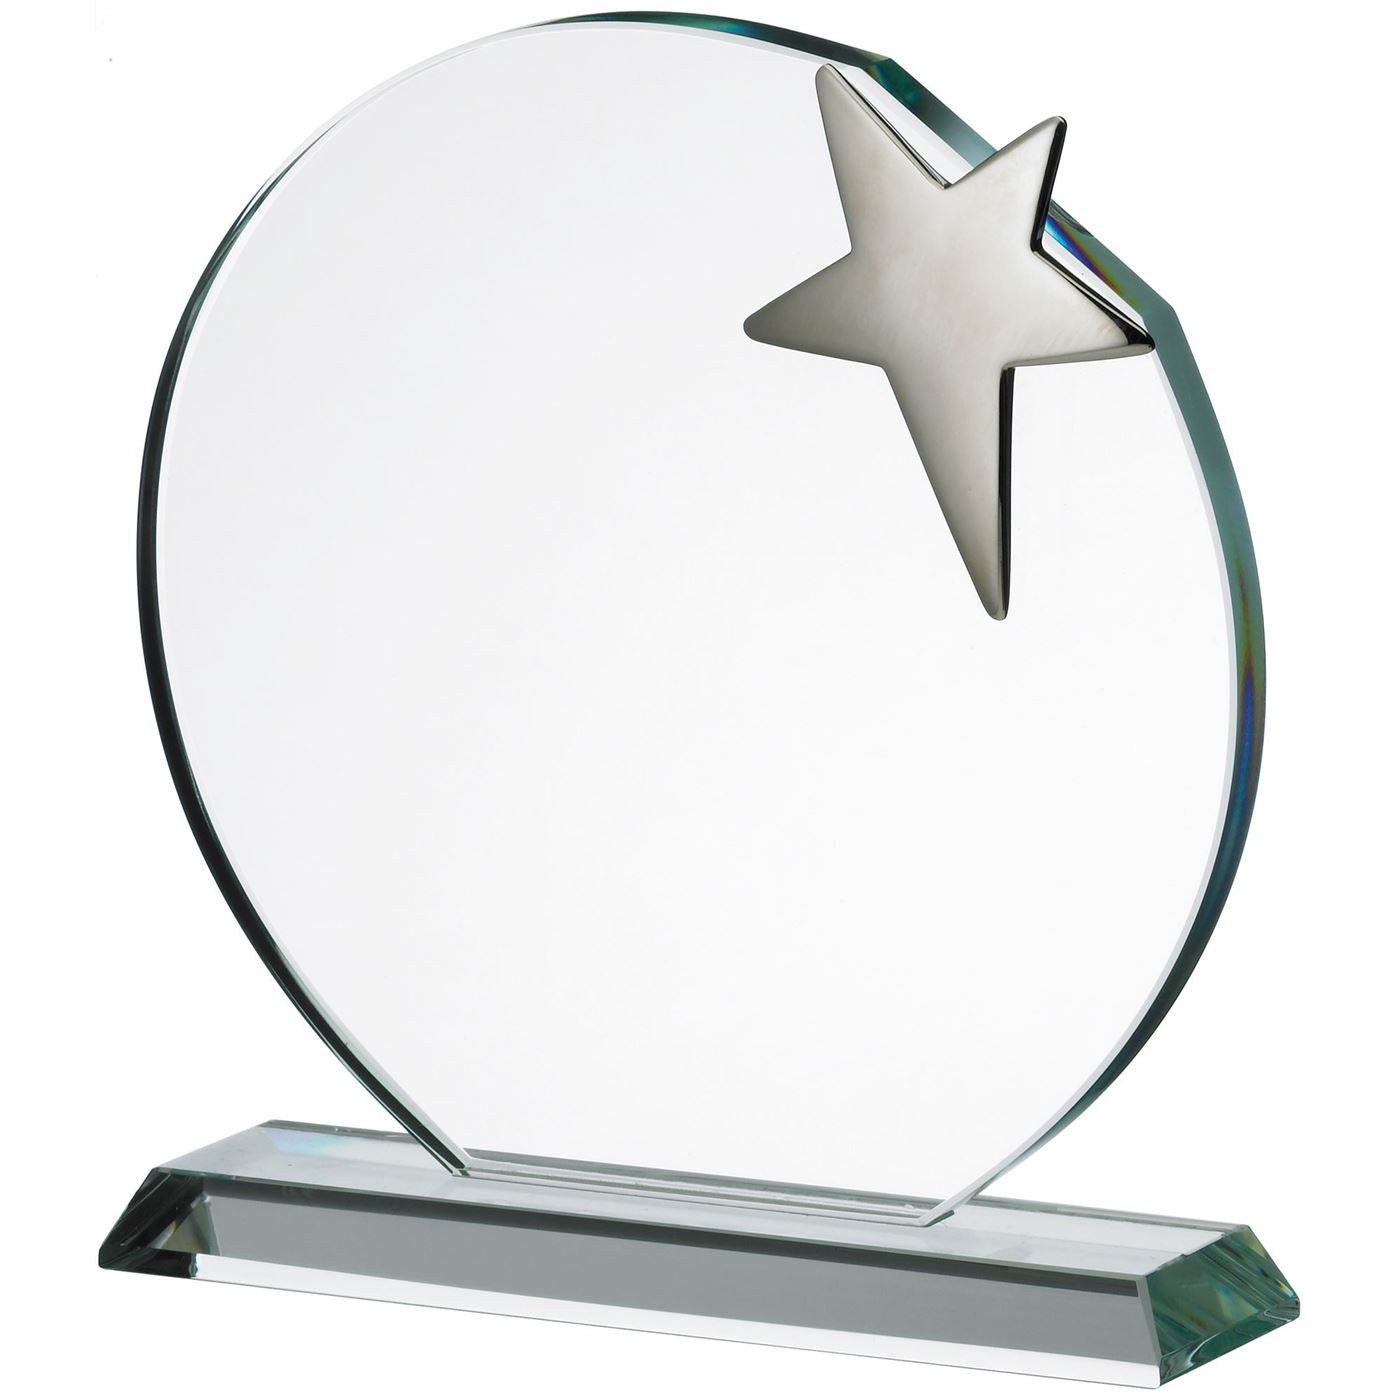 Ascent Star Crystal Glass Award